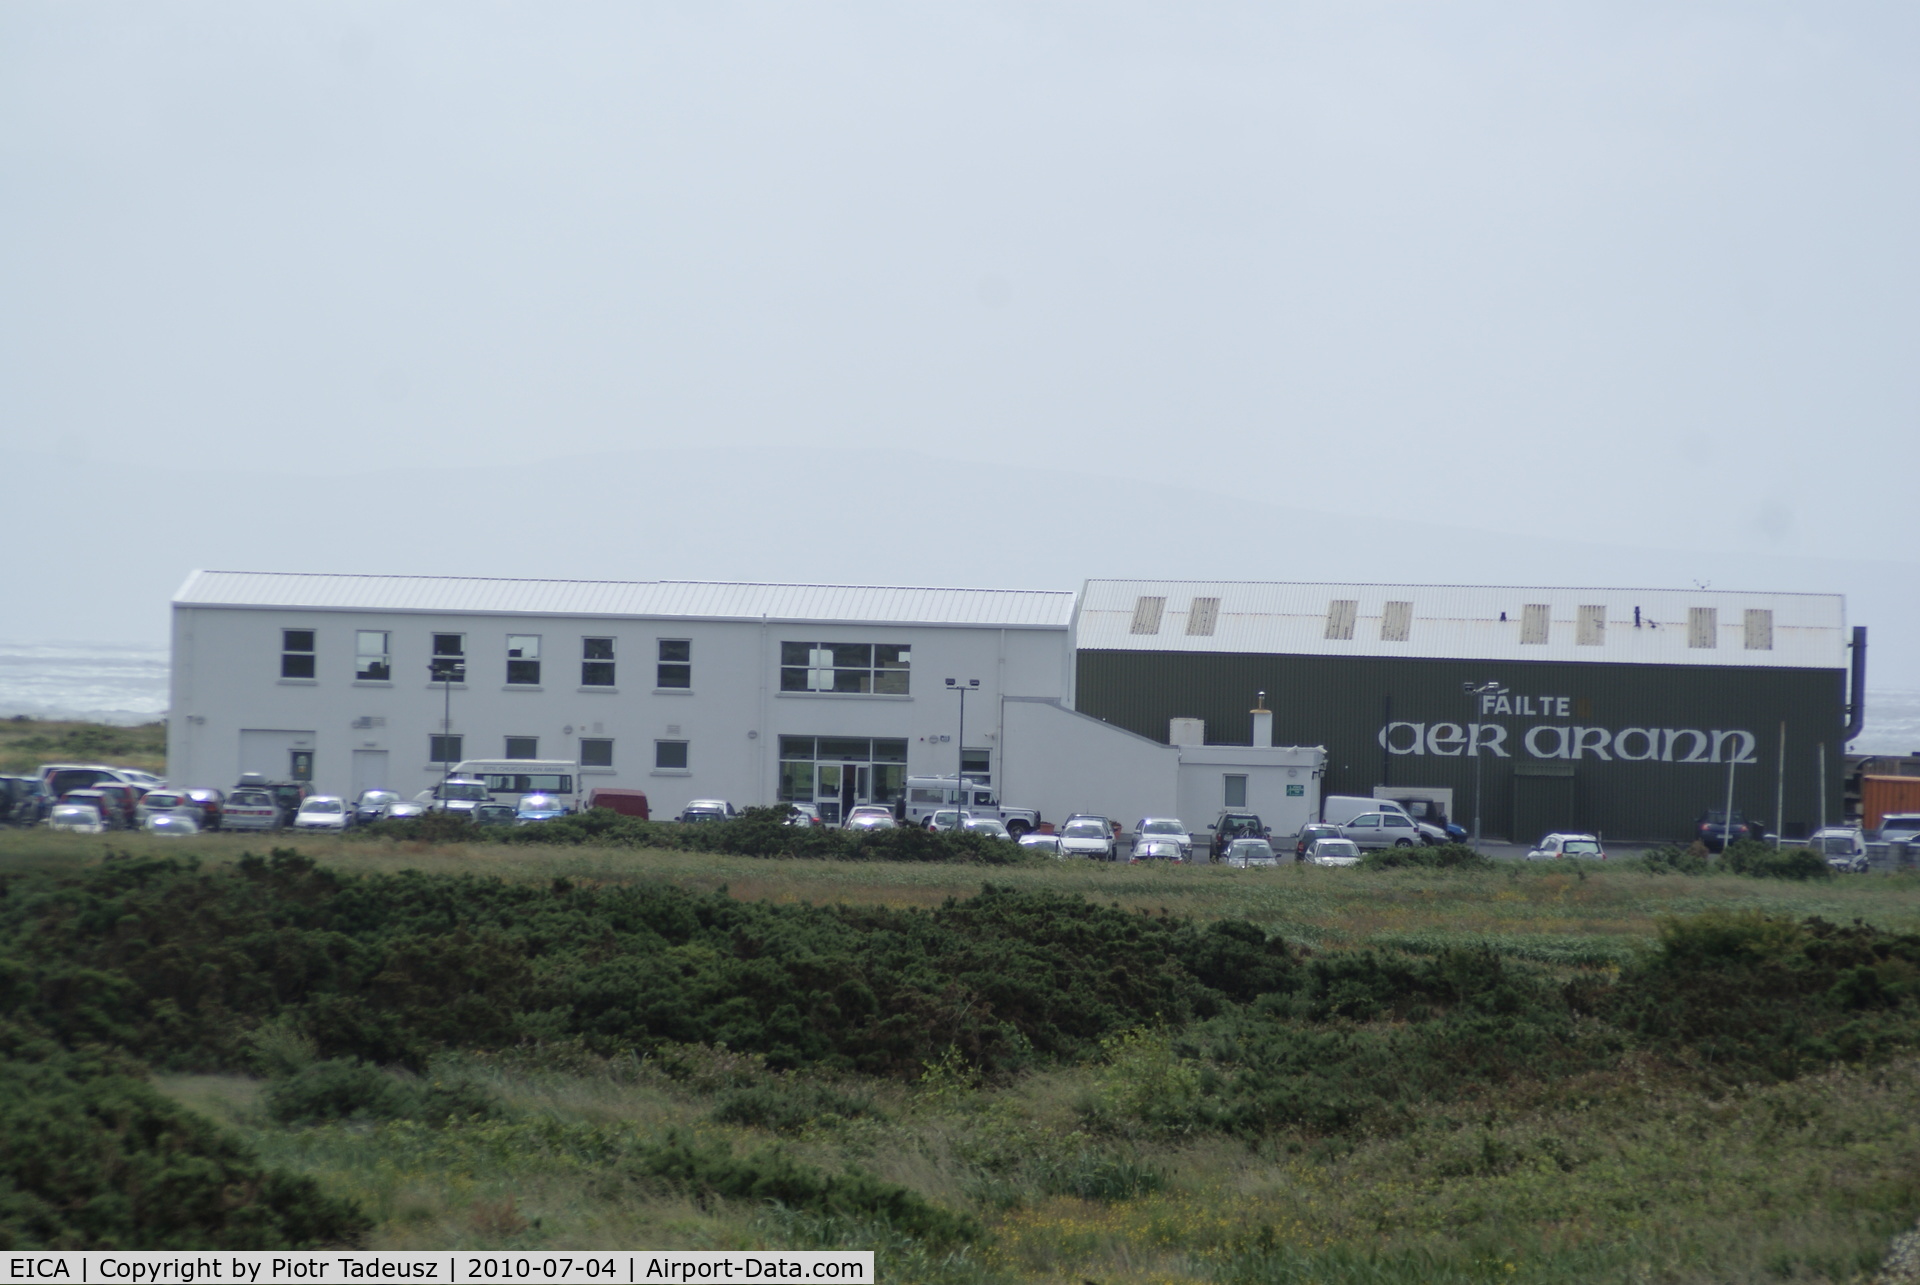 Connemara Regional Airport, Inverin, Connemara Ireland (EICA) - Connemara Regional Airport, Inverin, Connemara, Ireland
